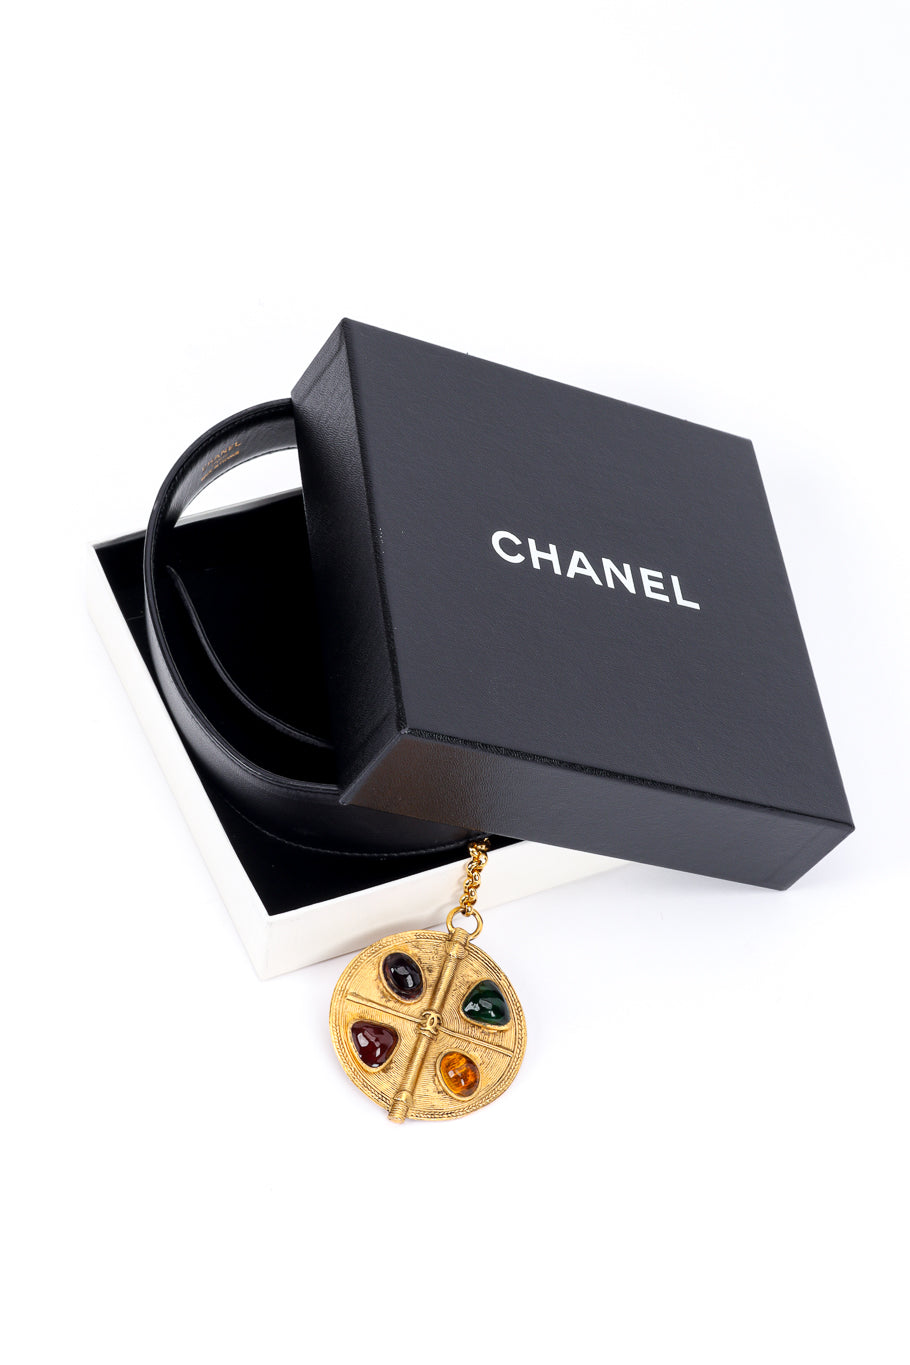 Chanel Gripoix Medallion Leather Belt with box @recessla